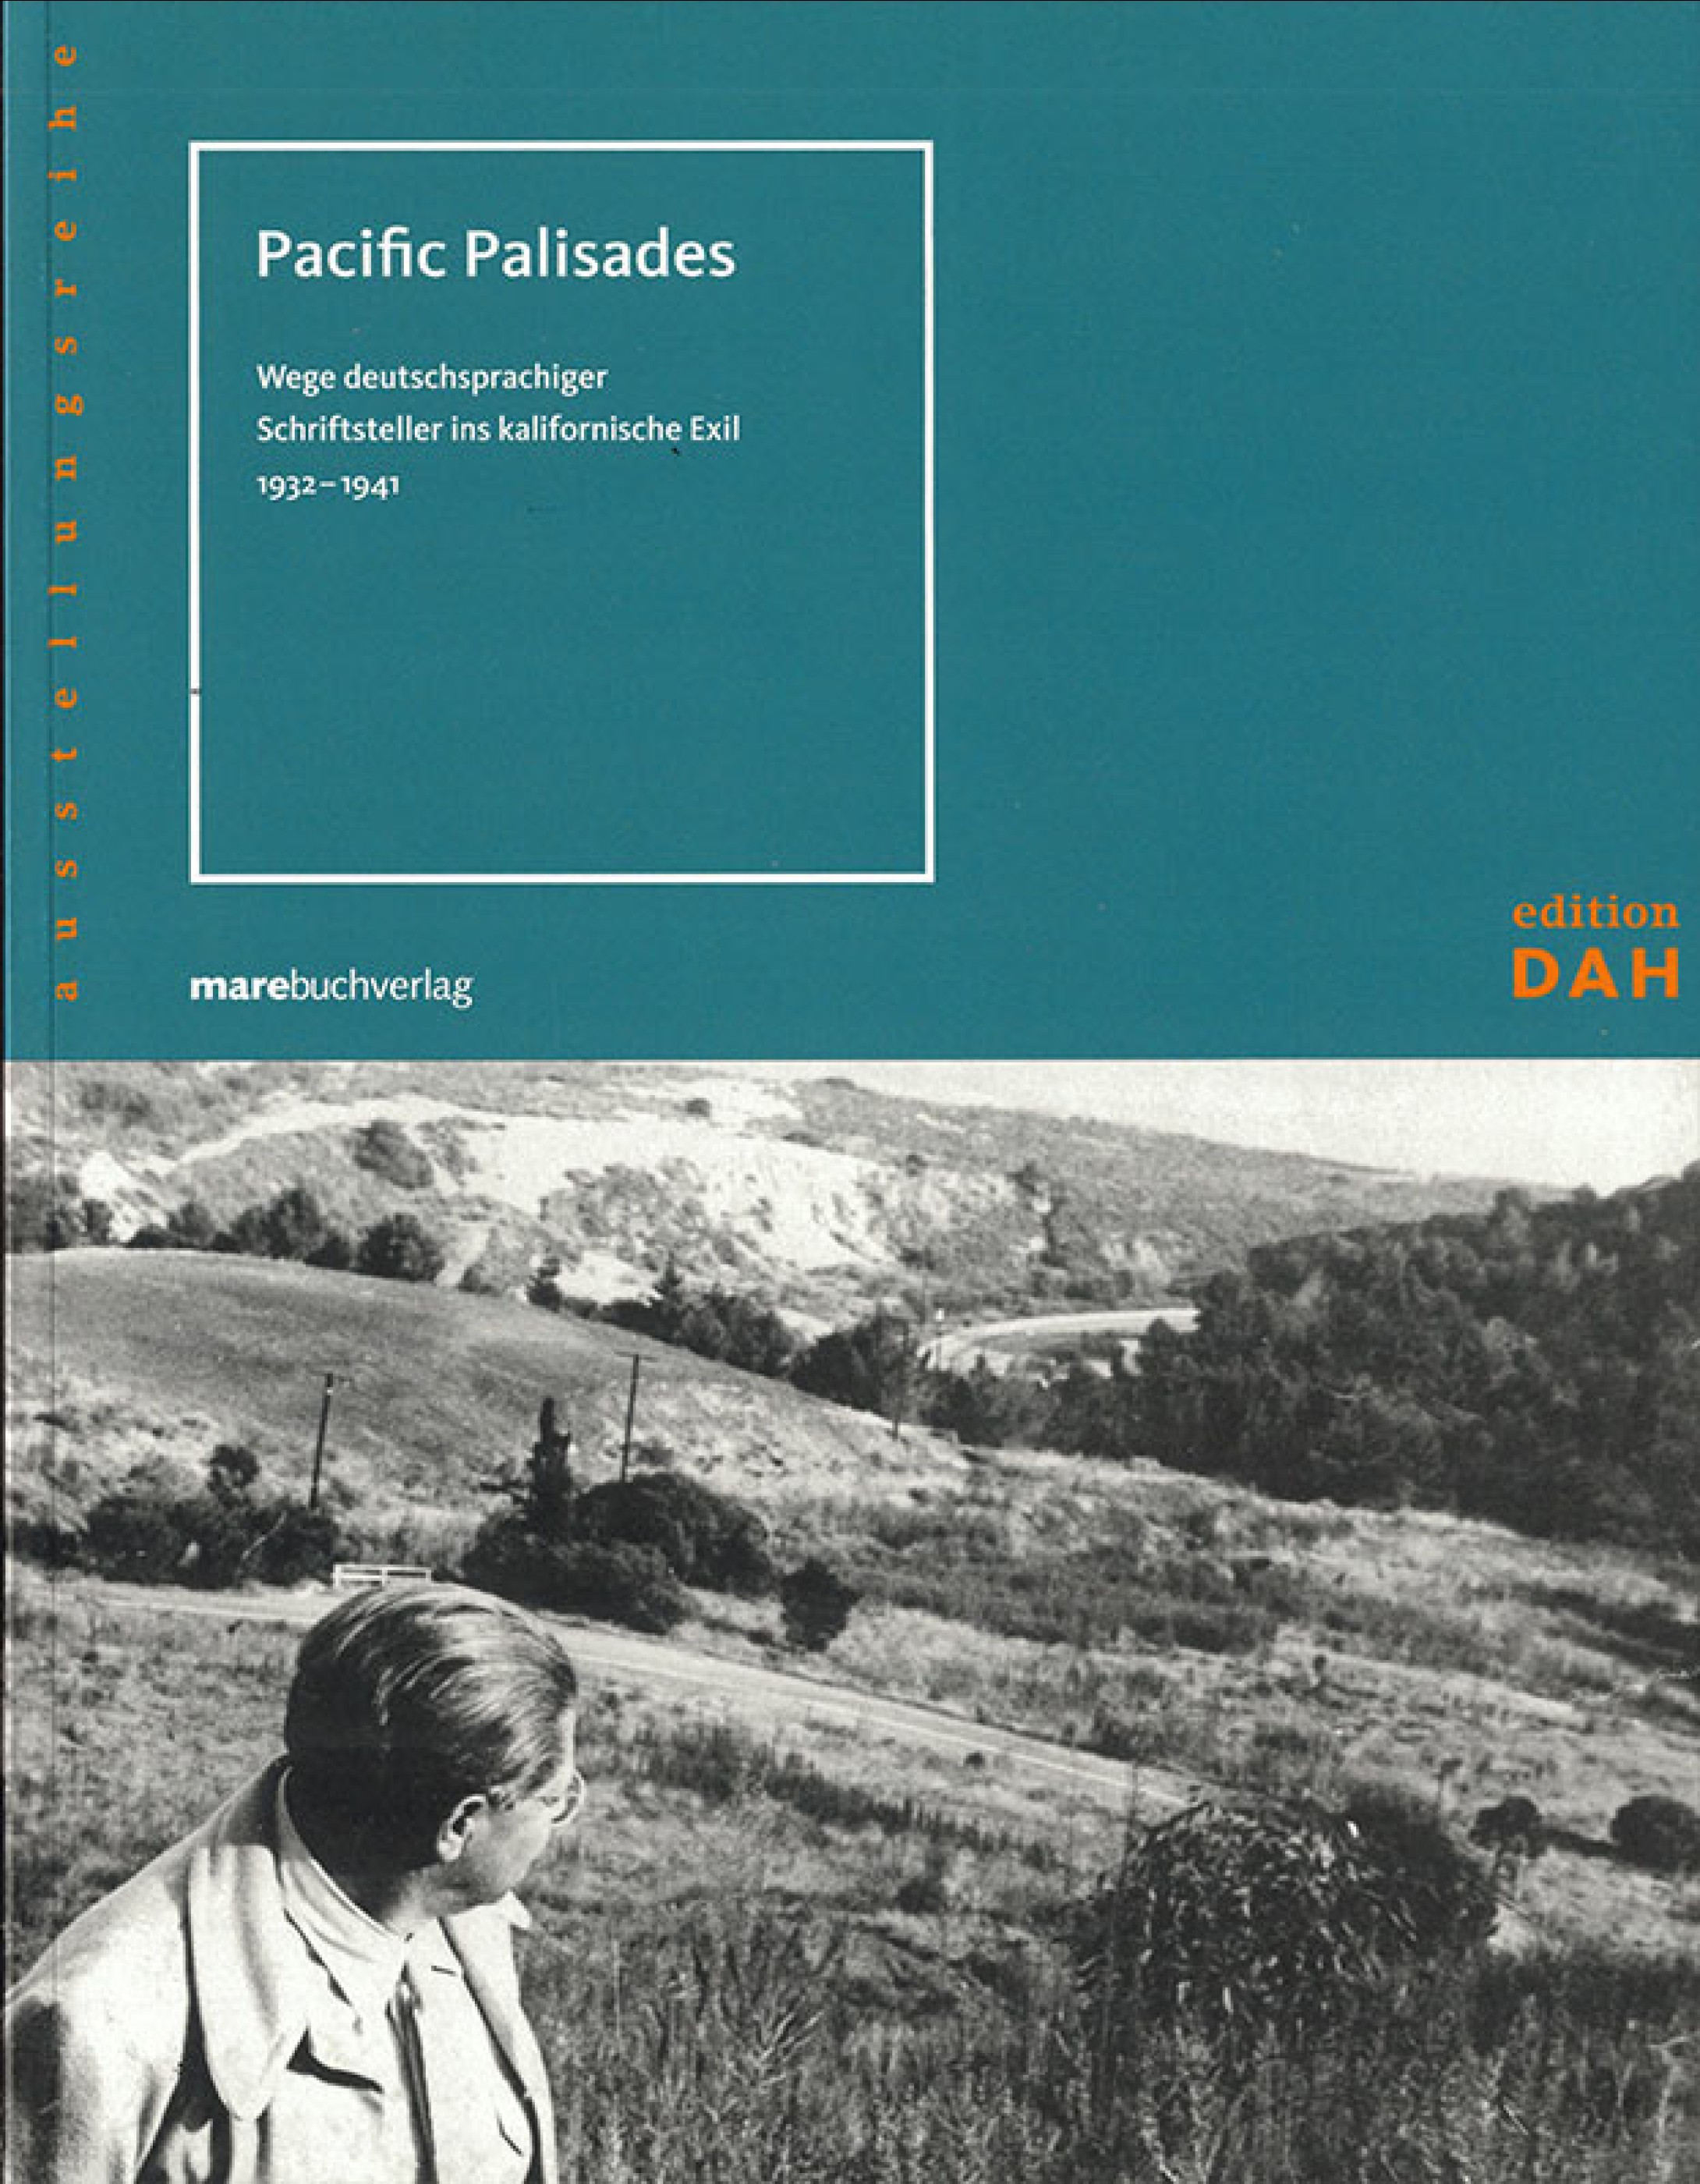 gr-Pacific-Palisades-editionDAH-Deutsches-Auswandererhaus